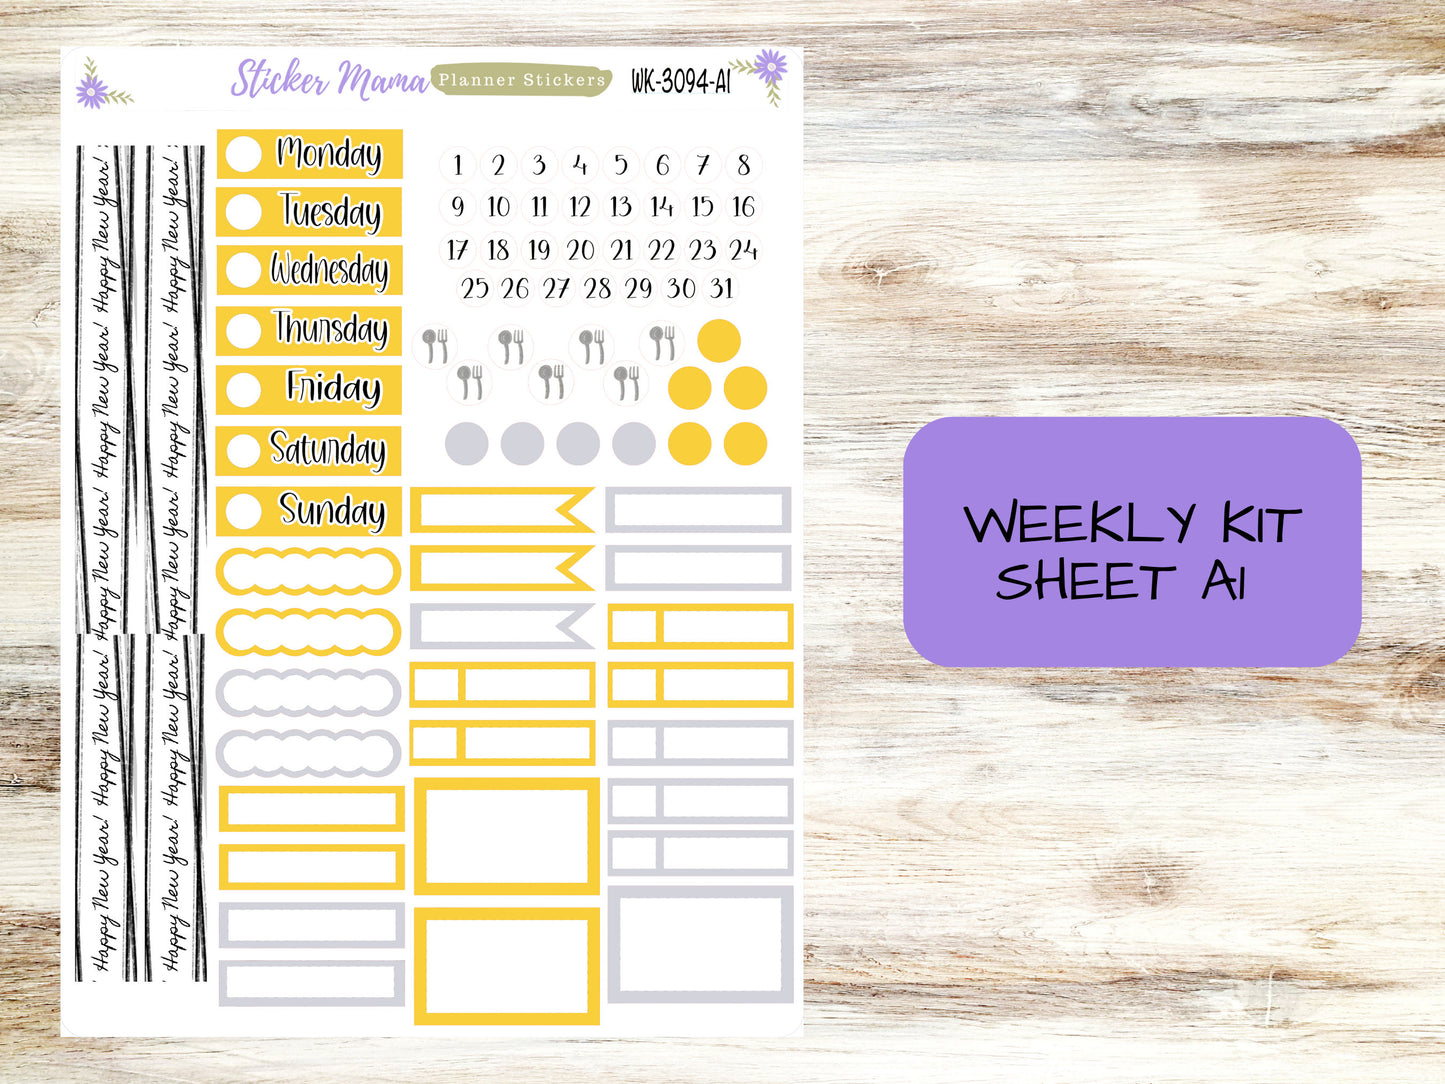 WK-3094 - Happy New Year  || Weekly Planner Kit || Erin Condren || Hourly Planner Kit || Vertical Planner Kit